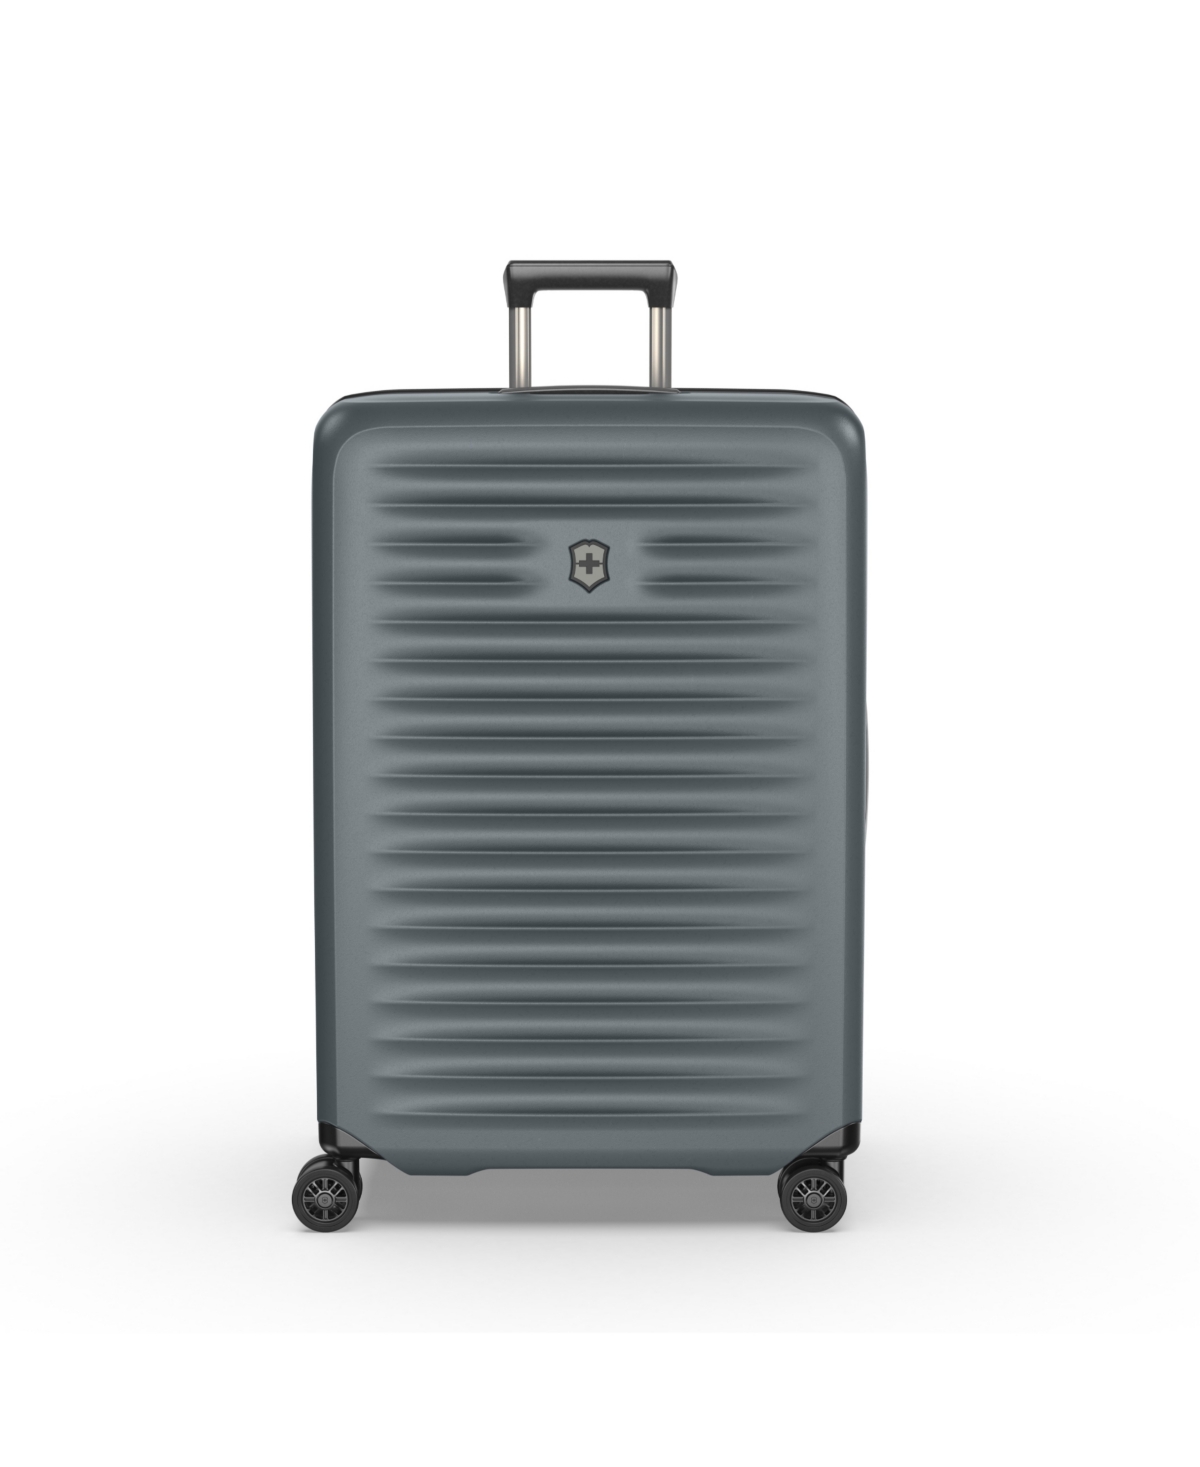 Airox Advanced Large Luggage - Black